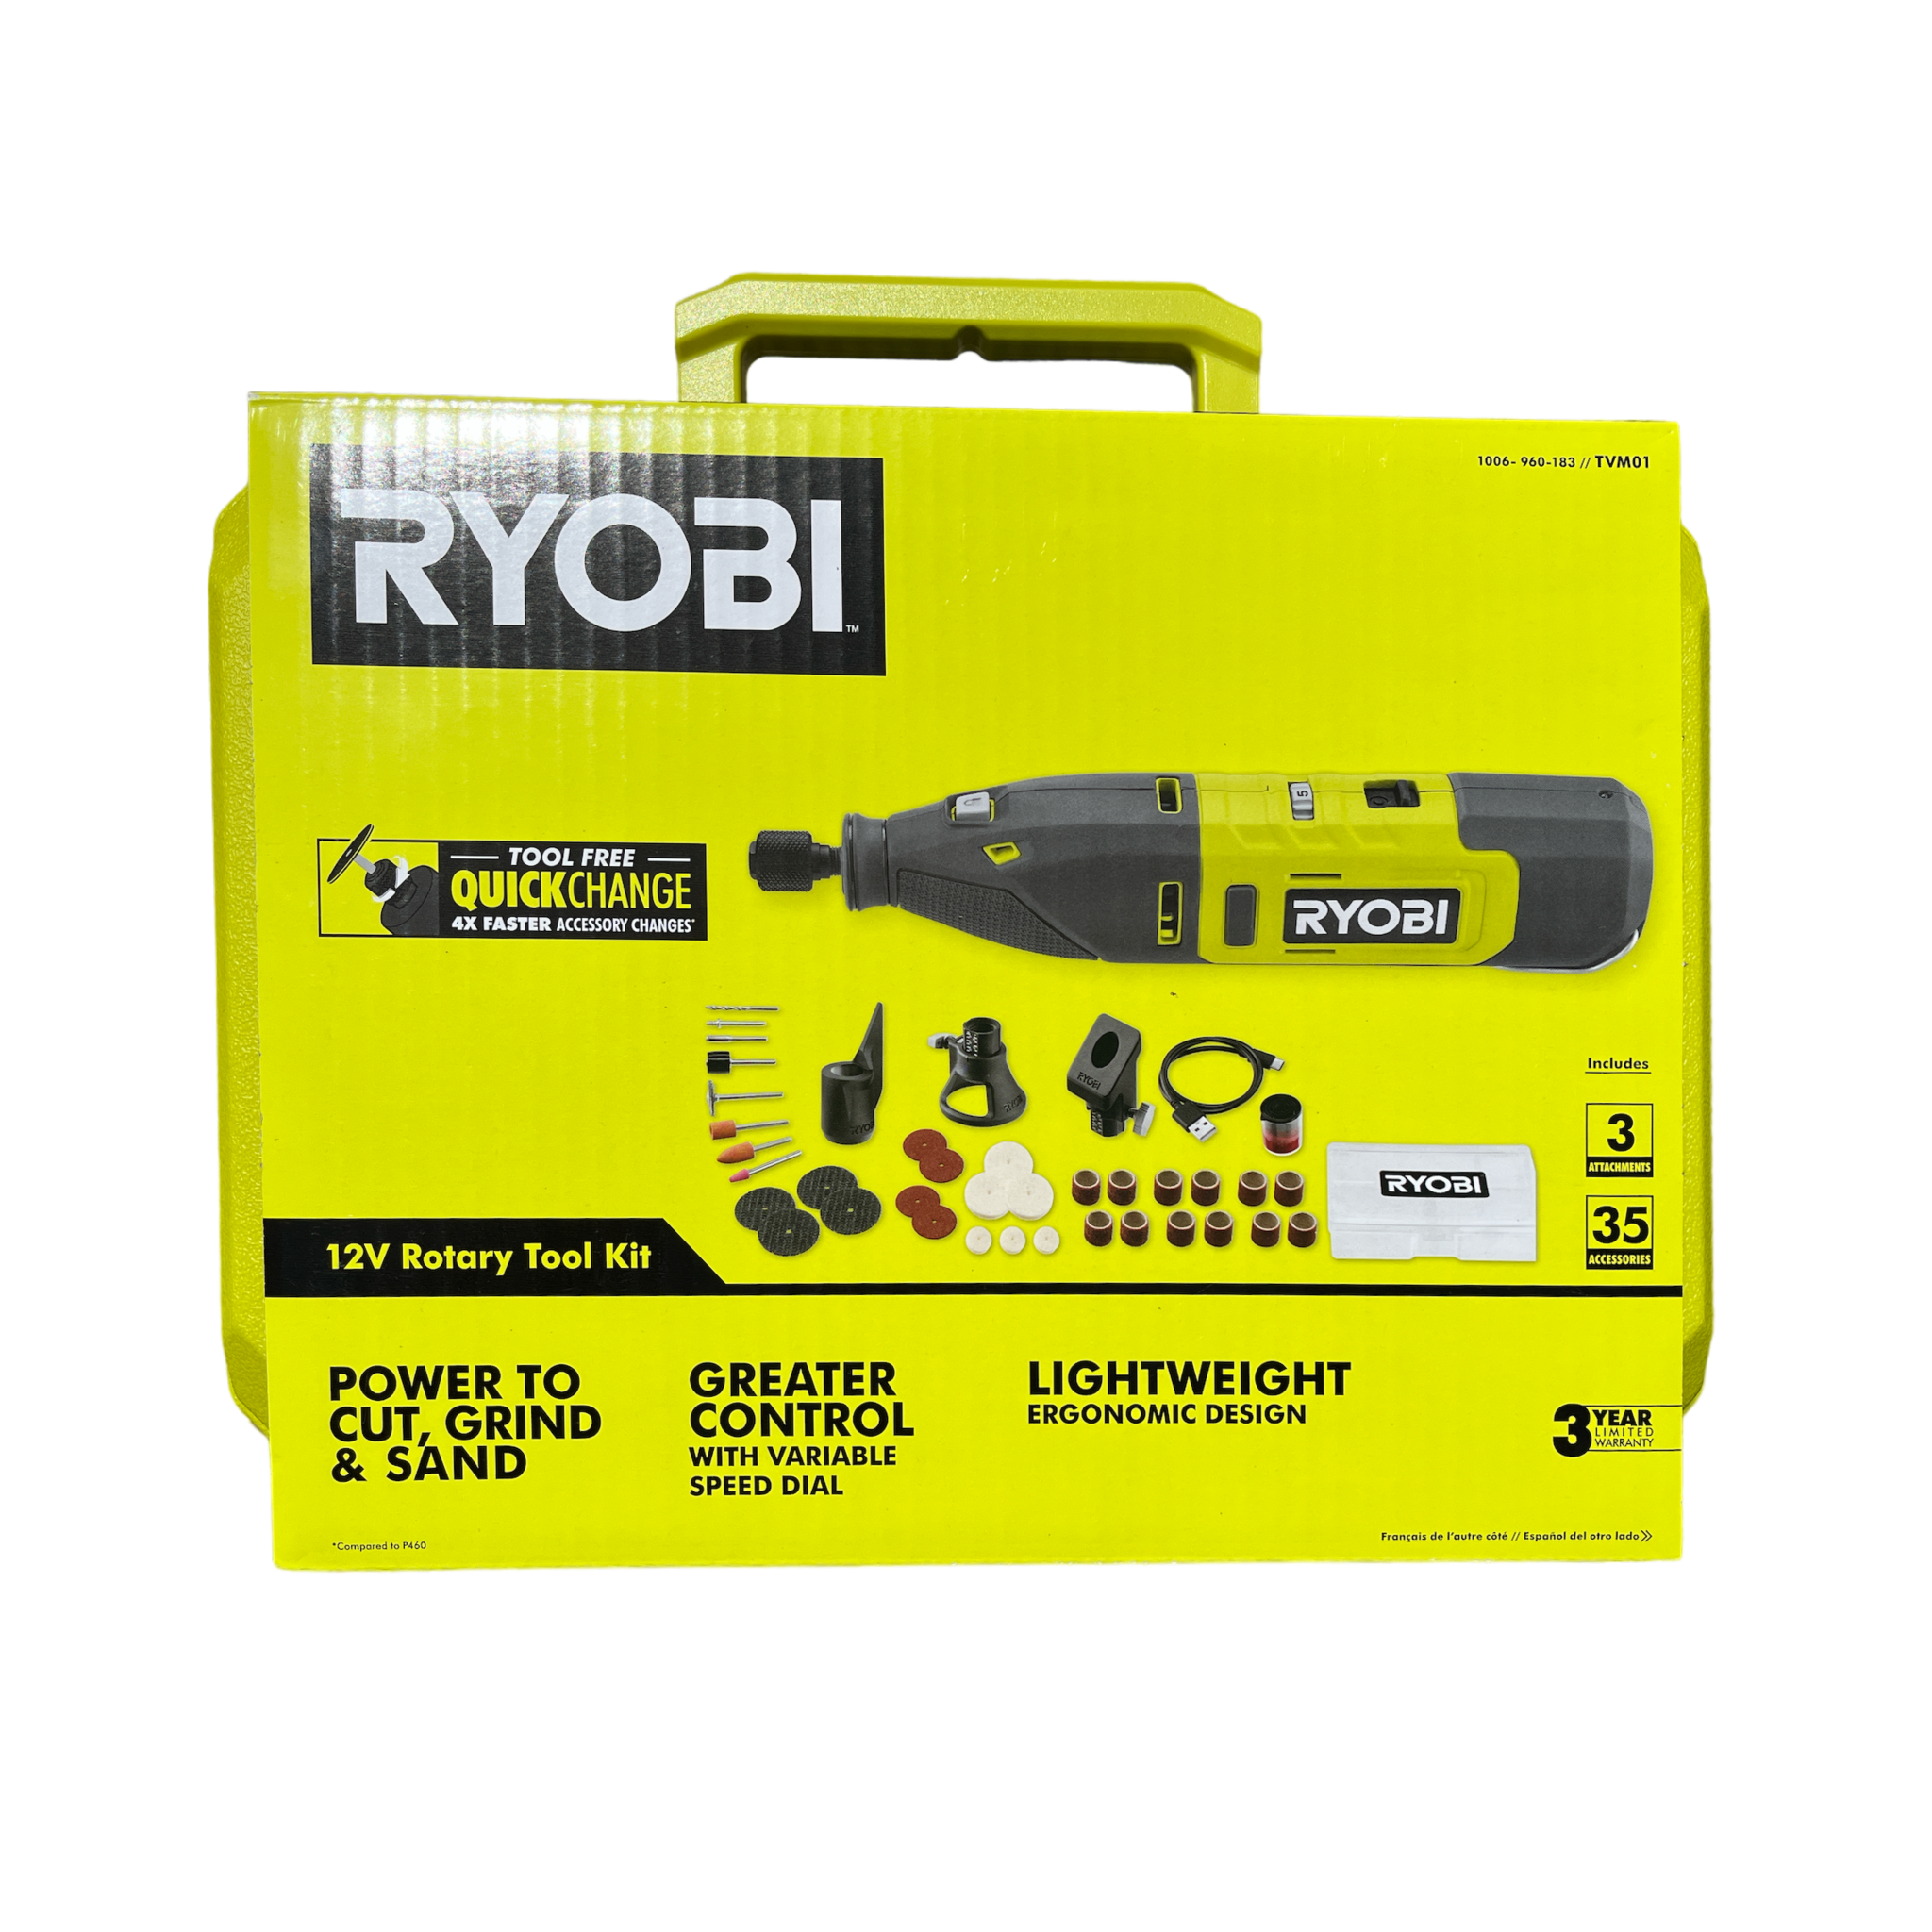 Ryobi 18-Volt One+ Cordless Rotary Tool P460